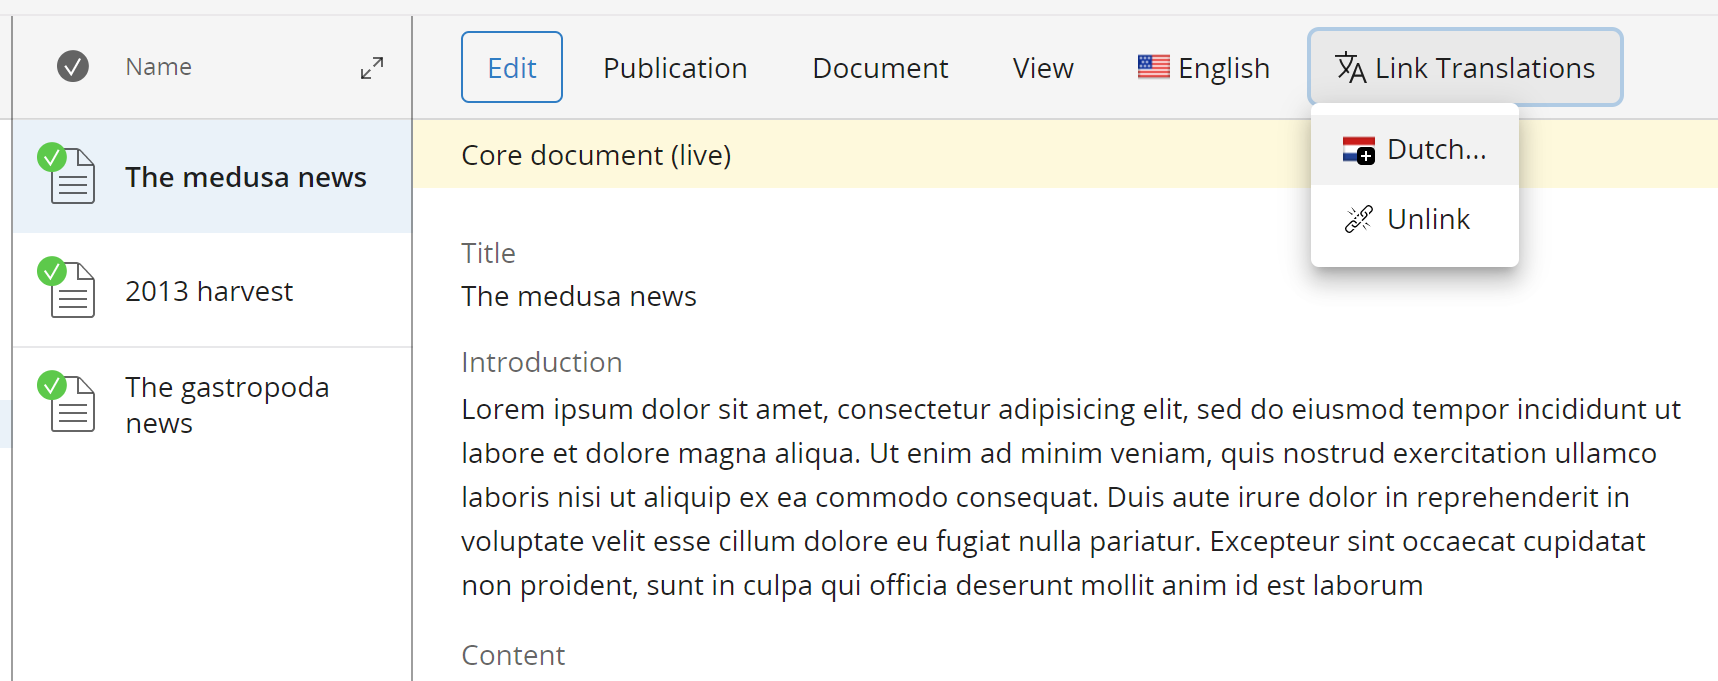 Screenshot of the Document Translation Picker menu